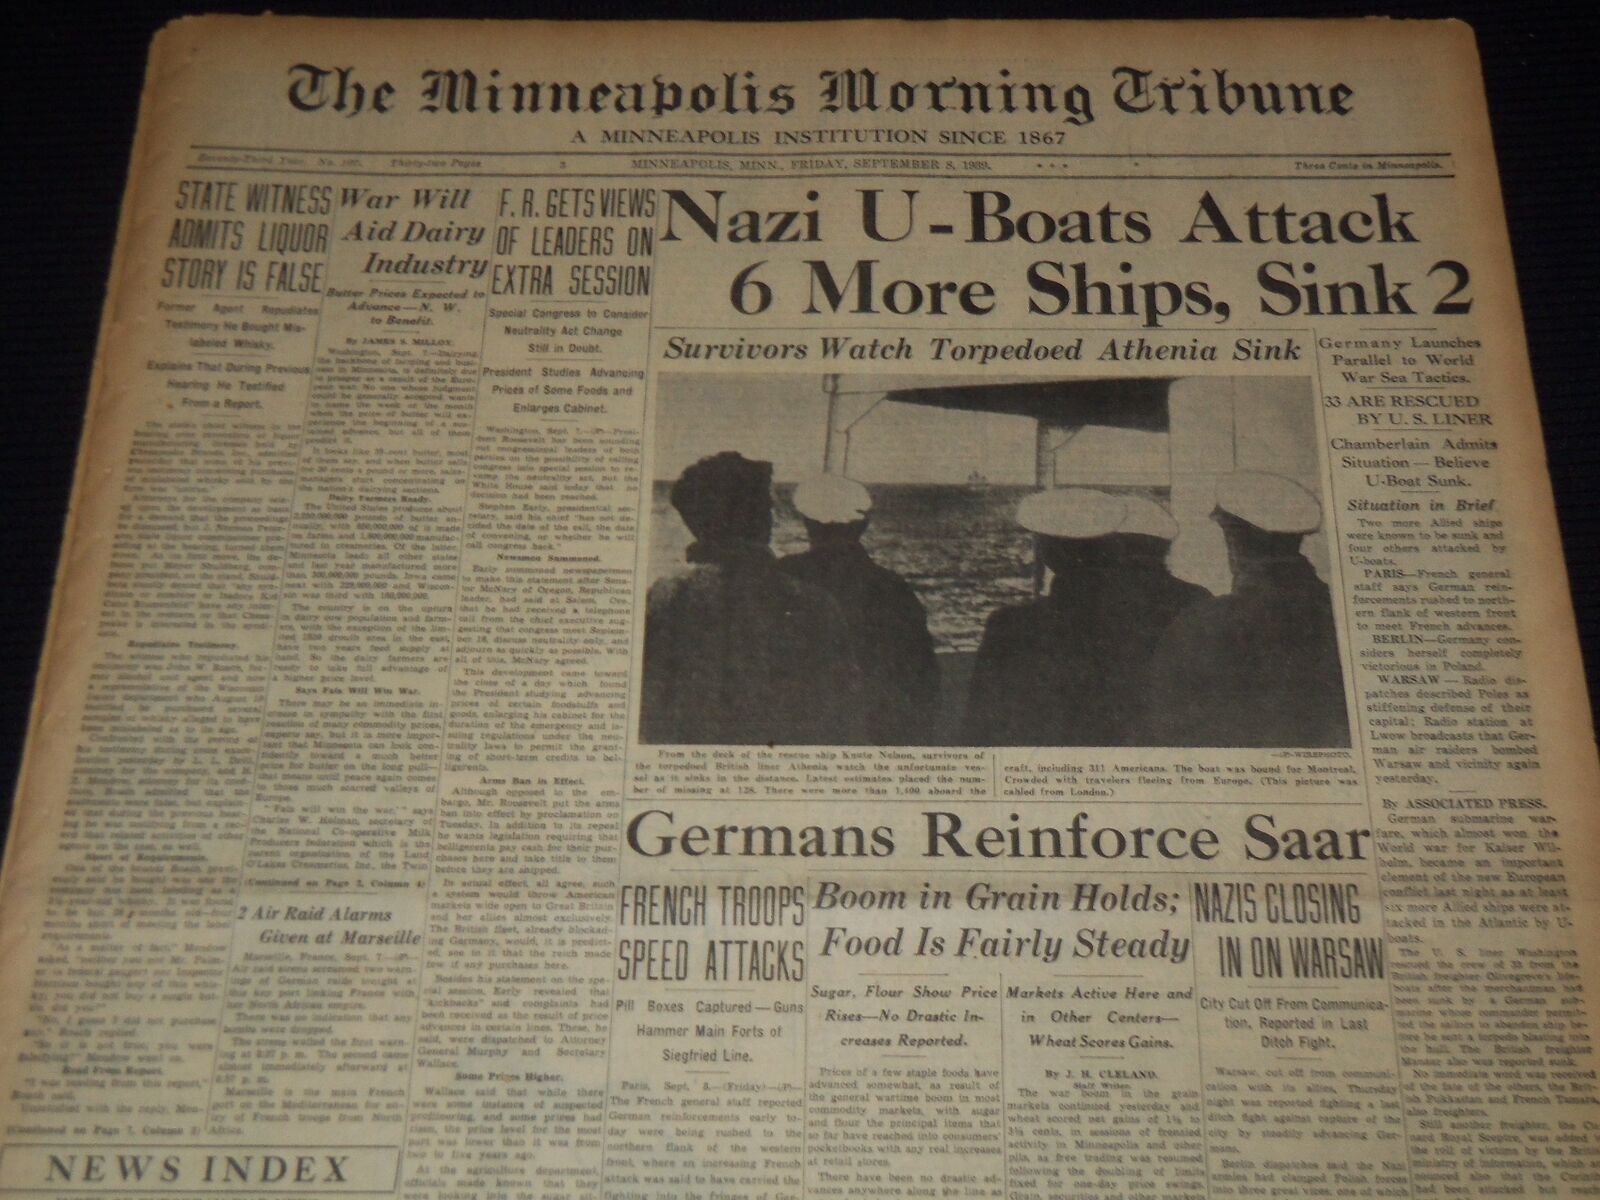 1939 SEPT 8 MINNEAPOLIS MORNING TRIBUNE - NAZI U-BOATS ATTACK 6 SHIPS - NT 9524